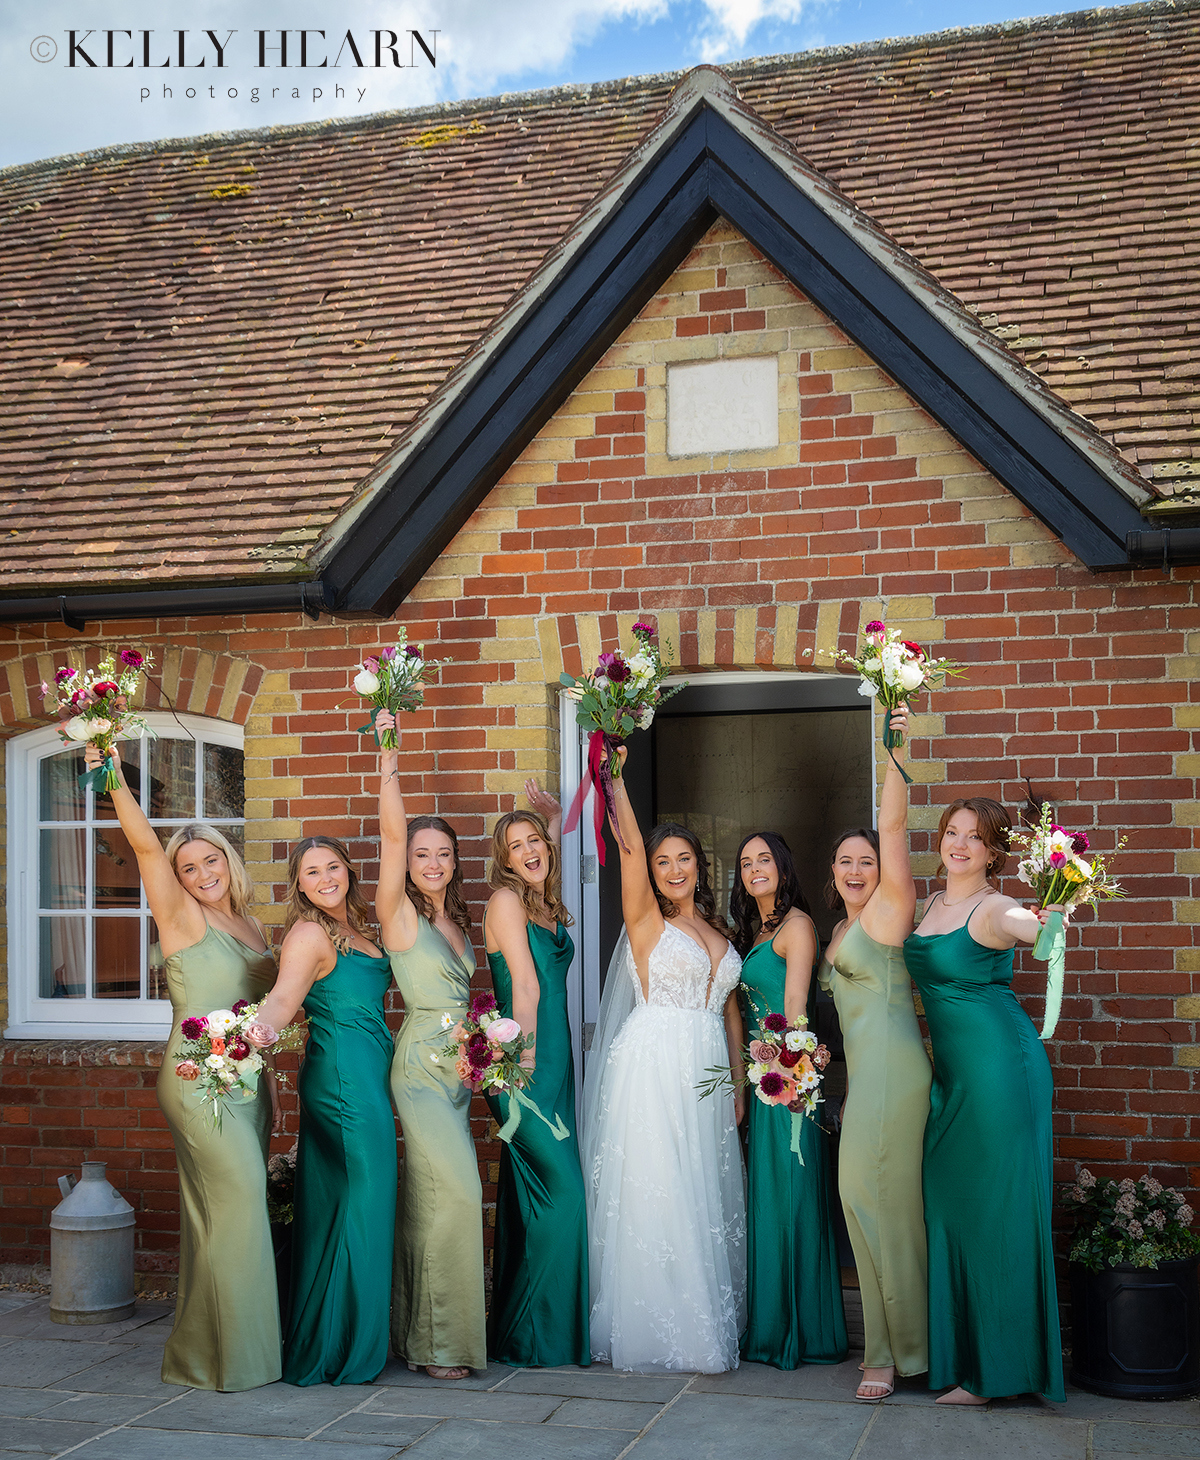 BAR_brides-and-bridesmaids-bouquets.jpg#asset:3626